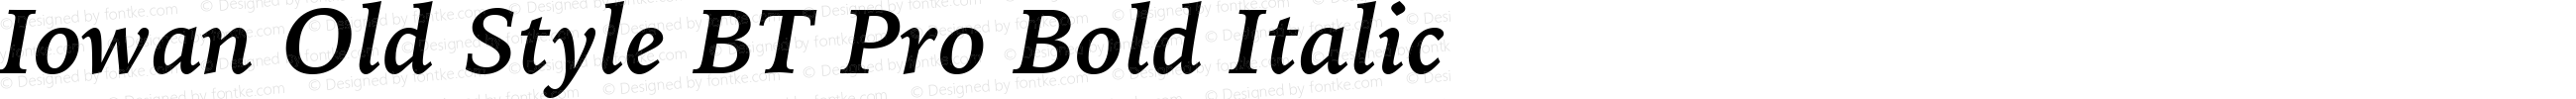 IowanOldSt BT Pro Bold Italic